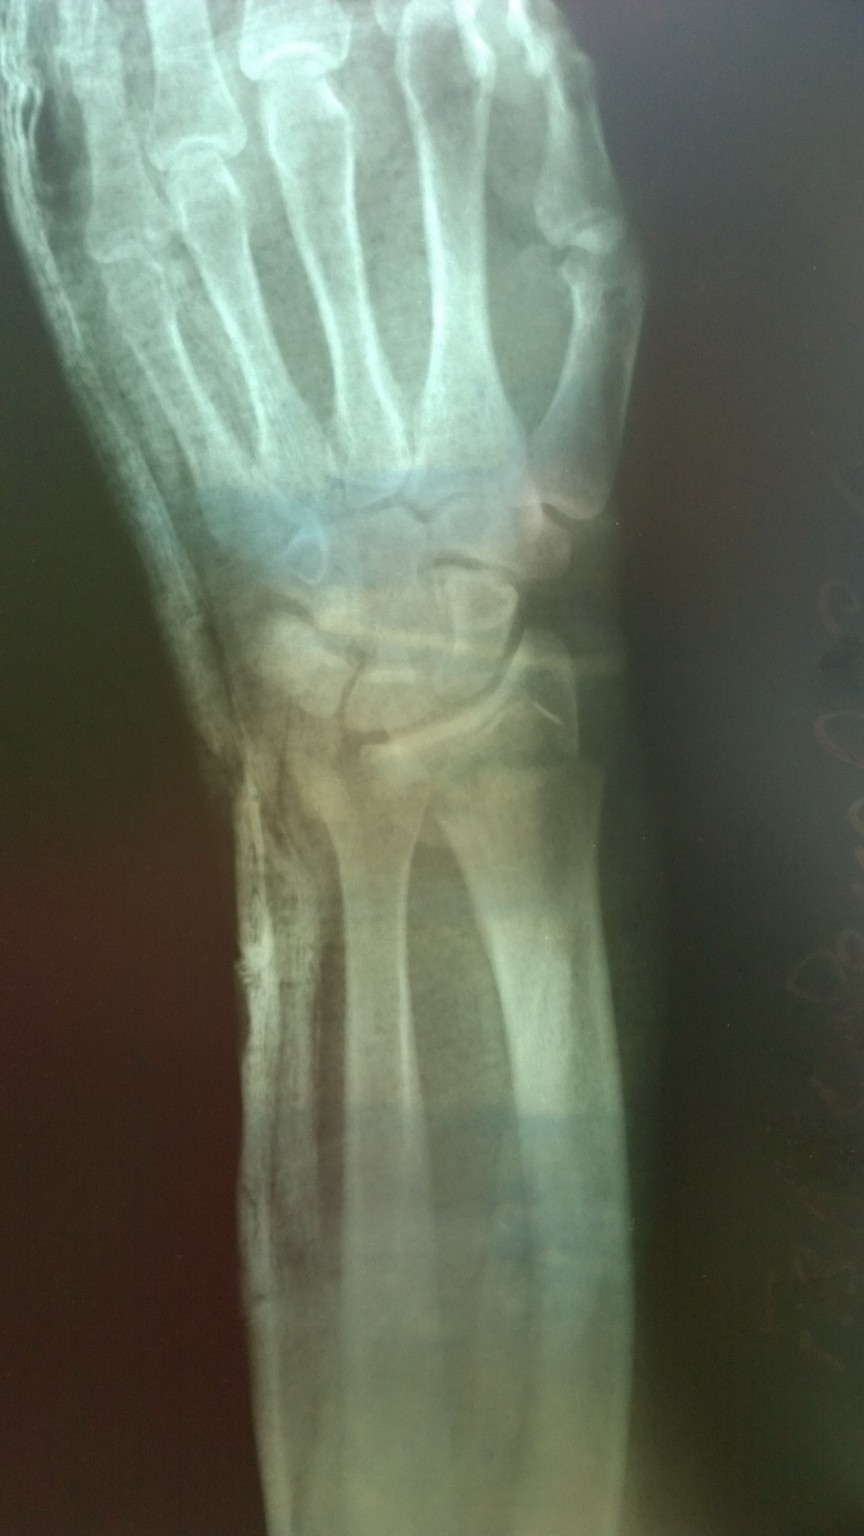 Перелом н 3. 3 Перелом левой лучевой кости. Перелом н/3 лучевой кости. Надкостный перелом лучевой кости. Перелом ДМЭ левой лучевой кости.